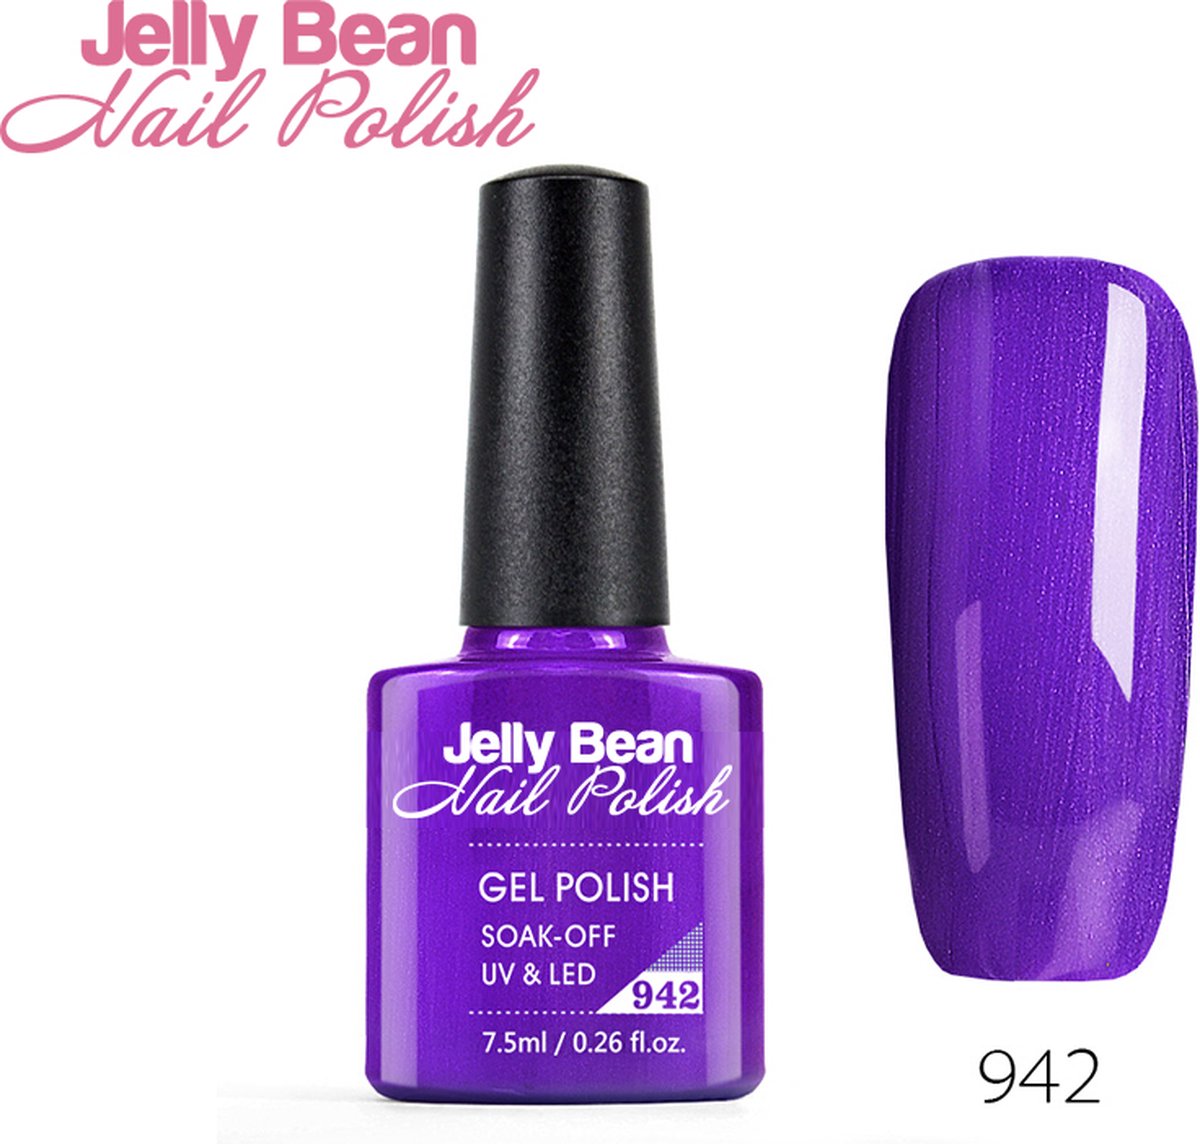 Jelly Bean Nail Polish UV gelnagellak 942